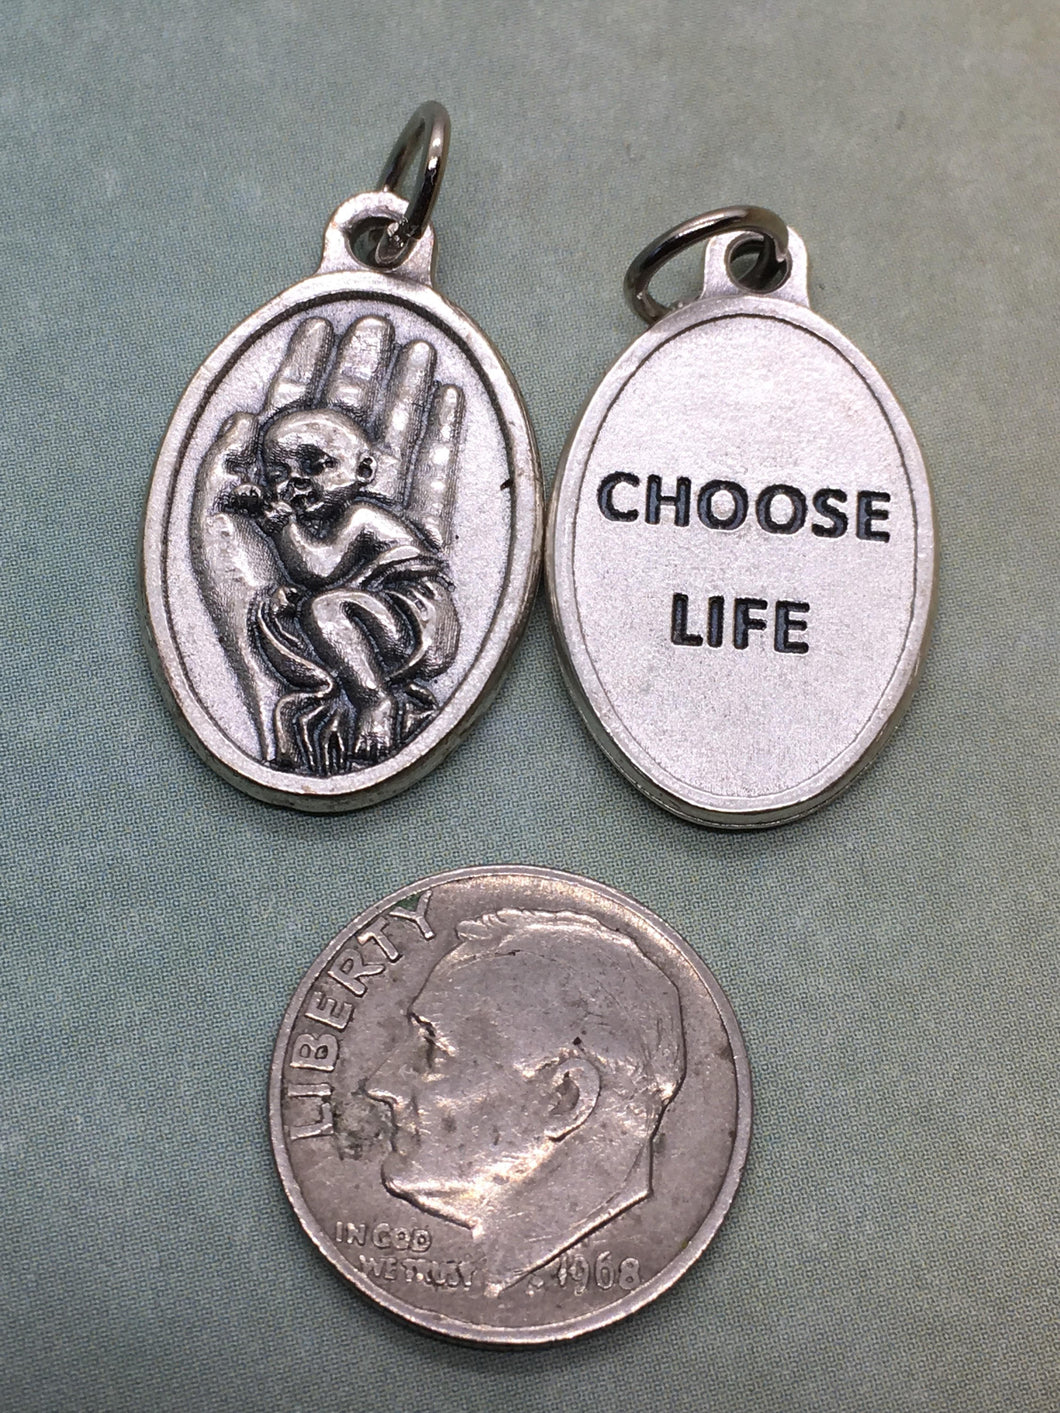 Choose Life holy medal